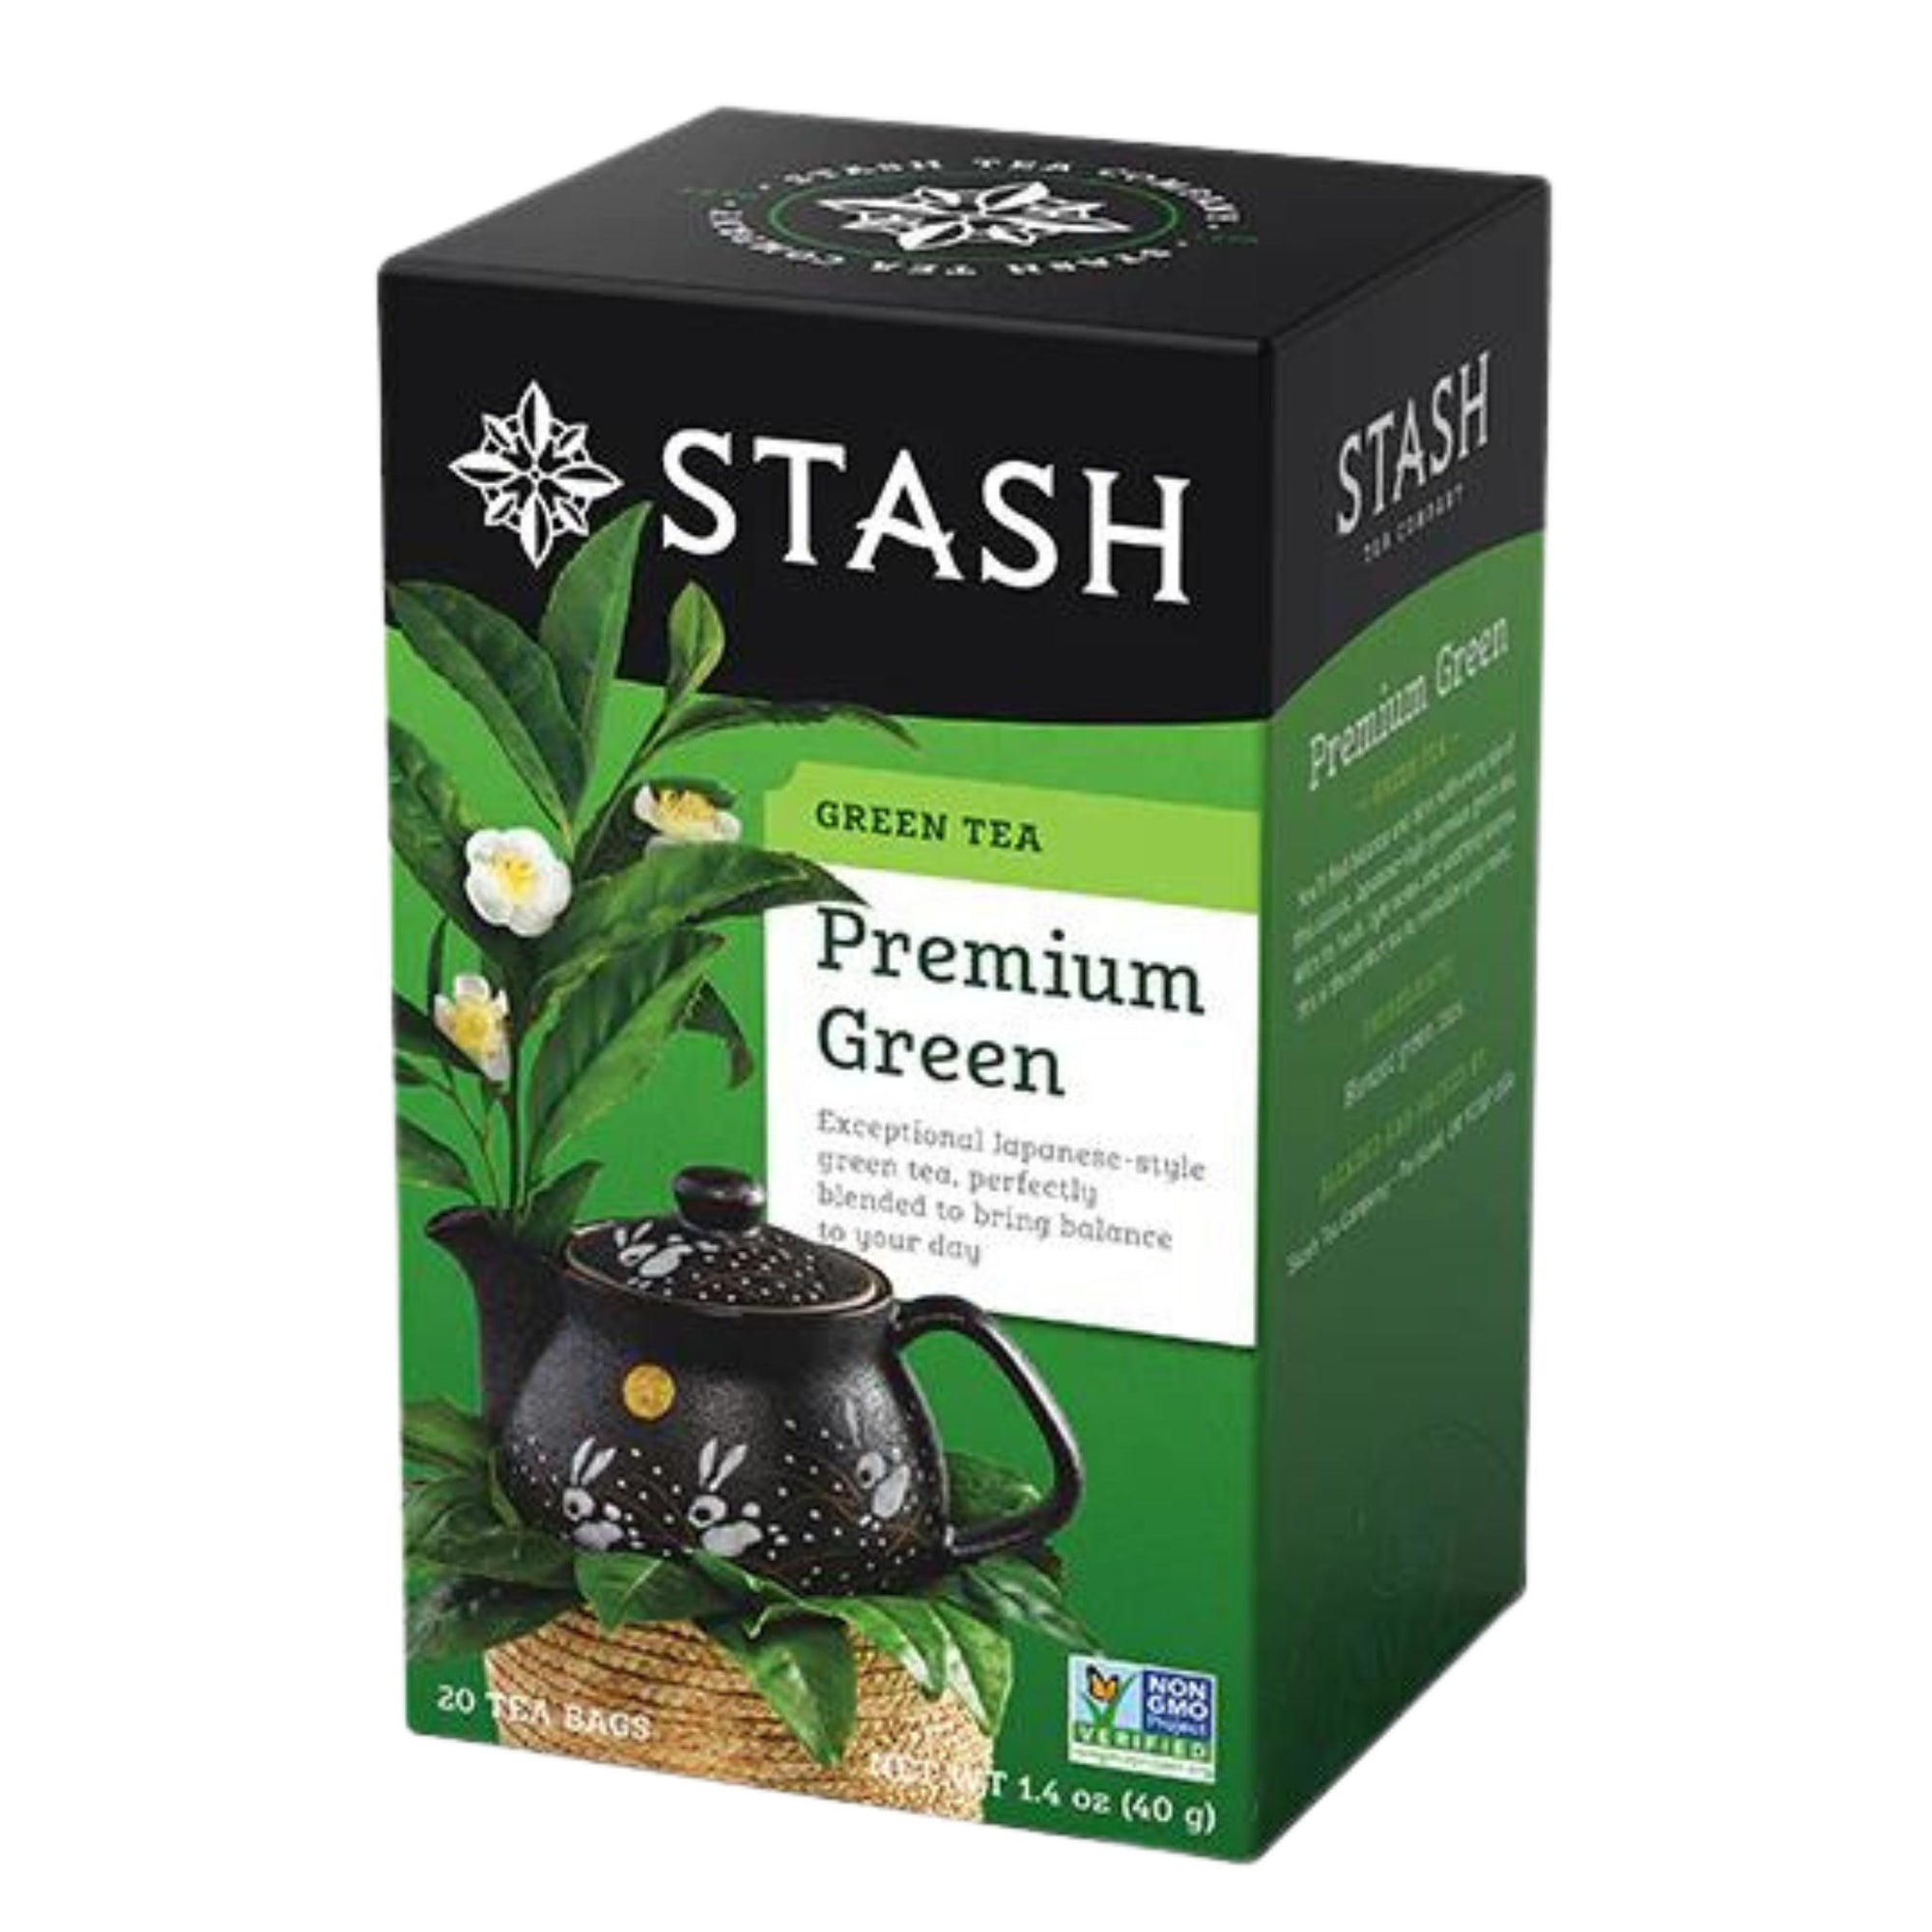 Stash Premium Green 20ct